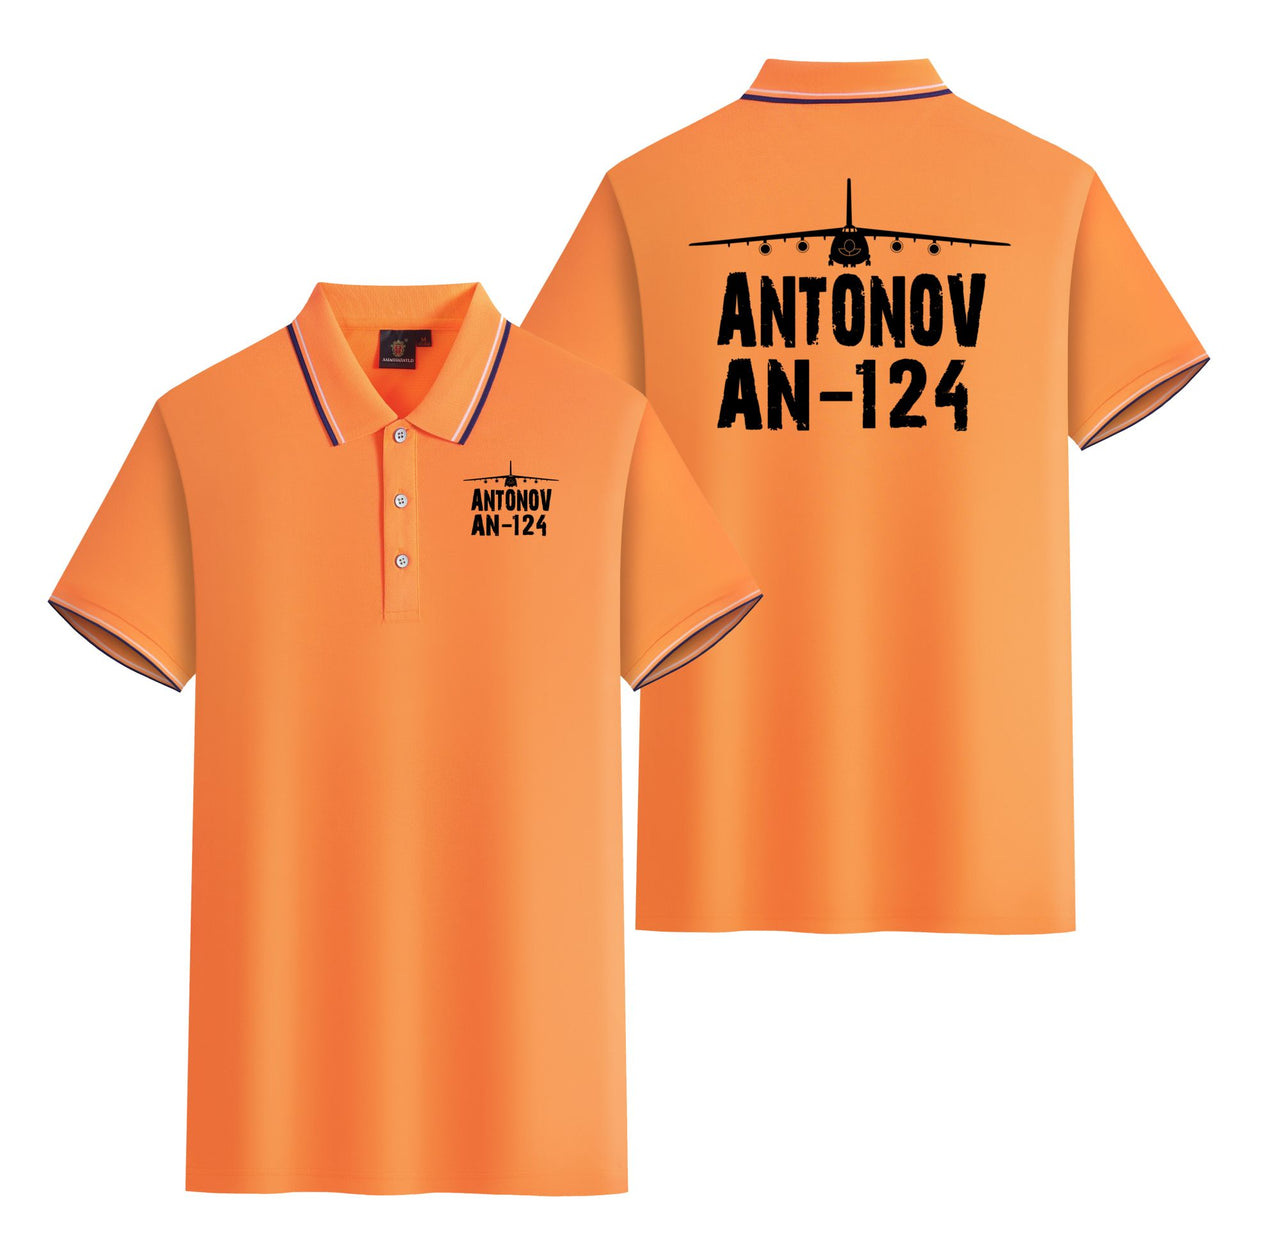 Antonov AN-124 & Plane Designed Stylish Polo T-Shirts (Double-Side)